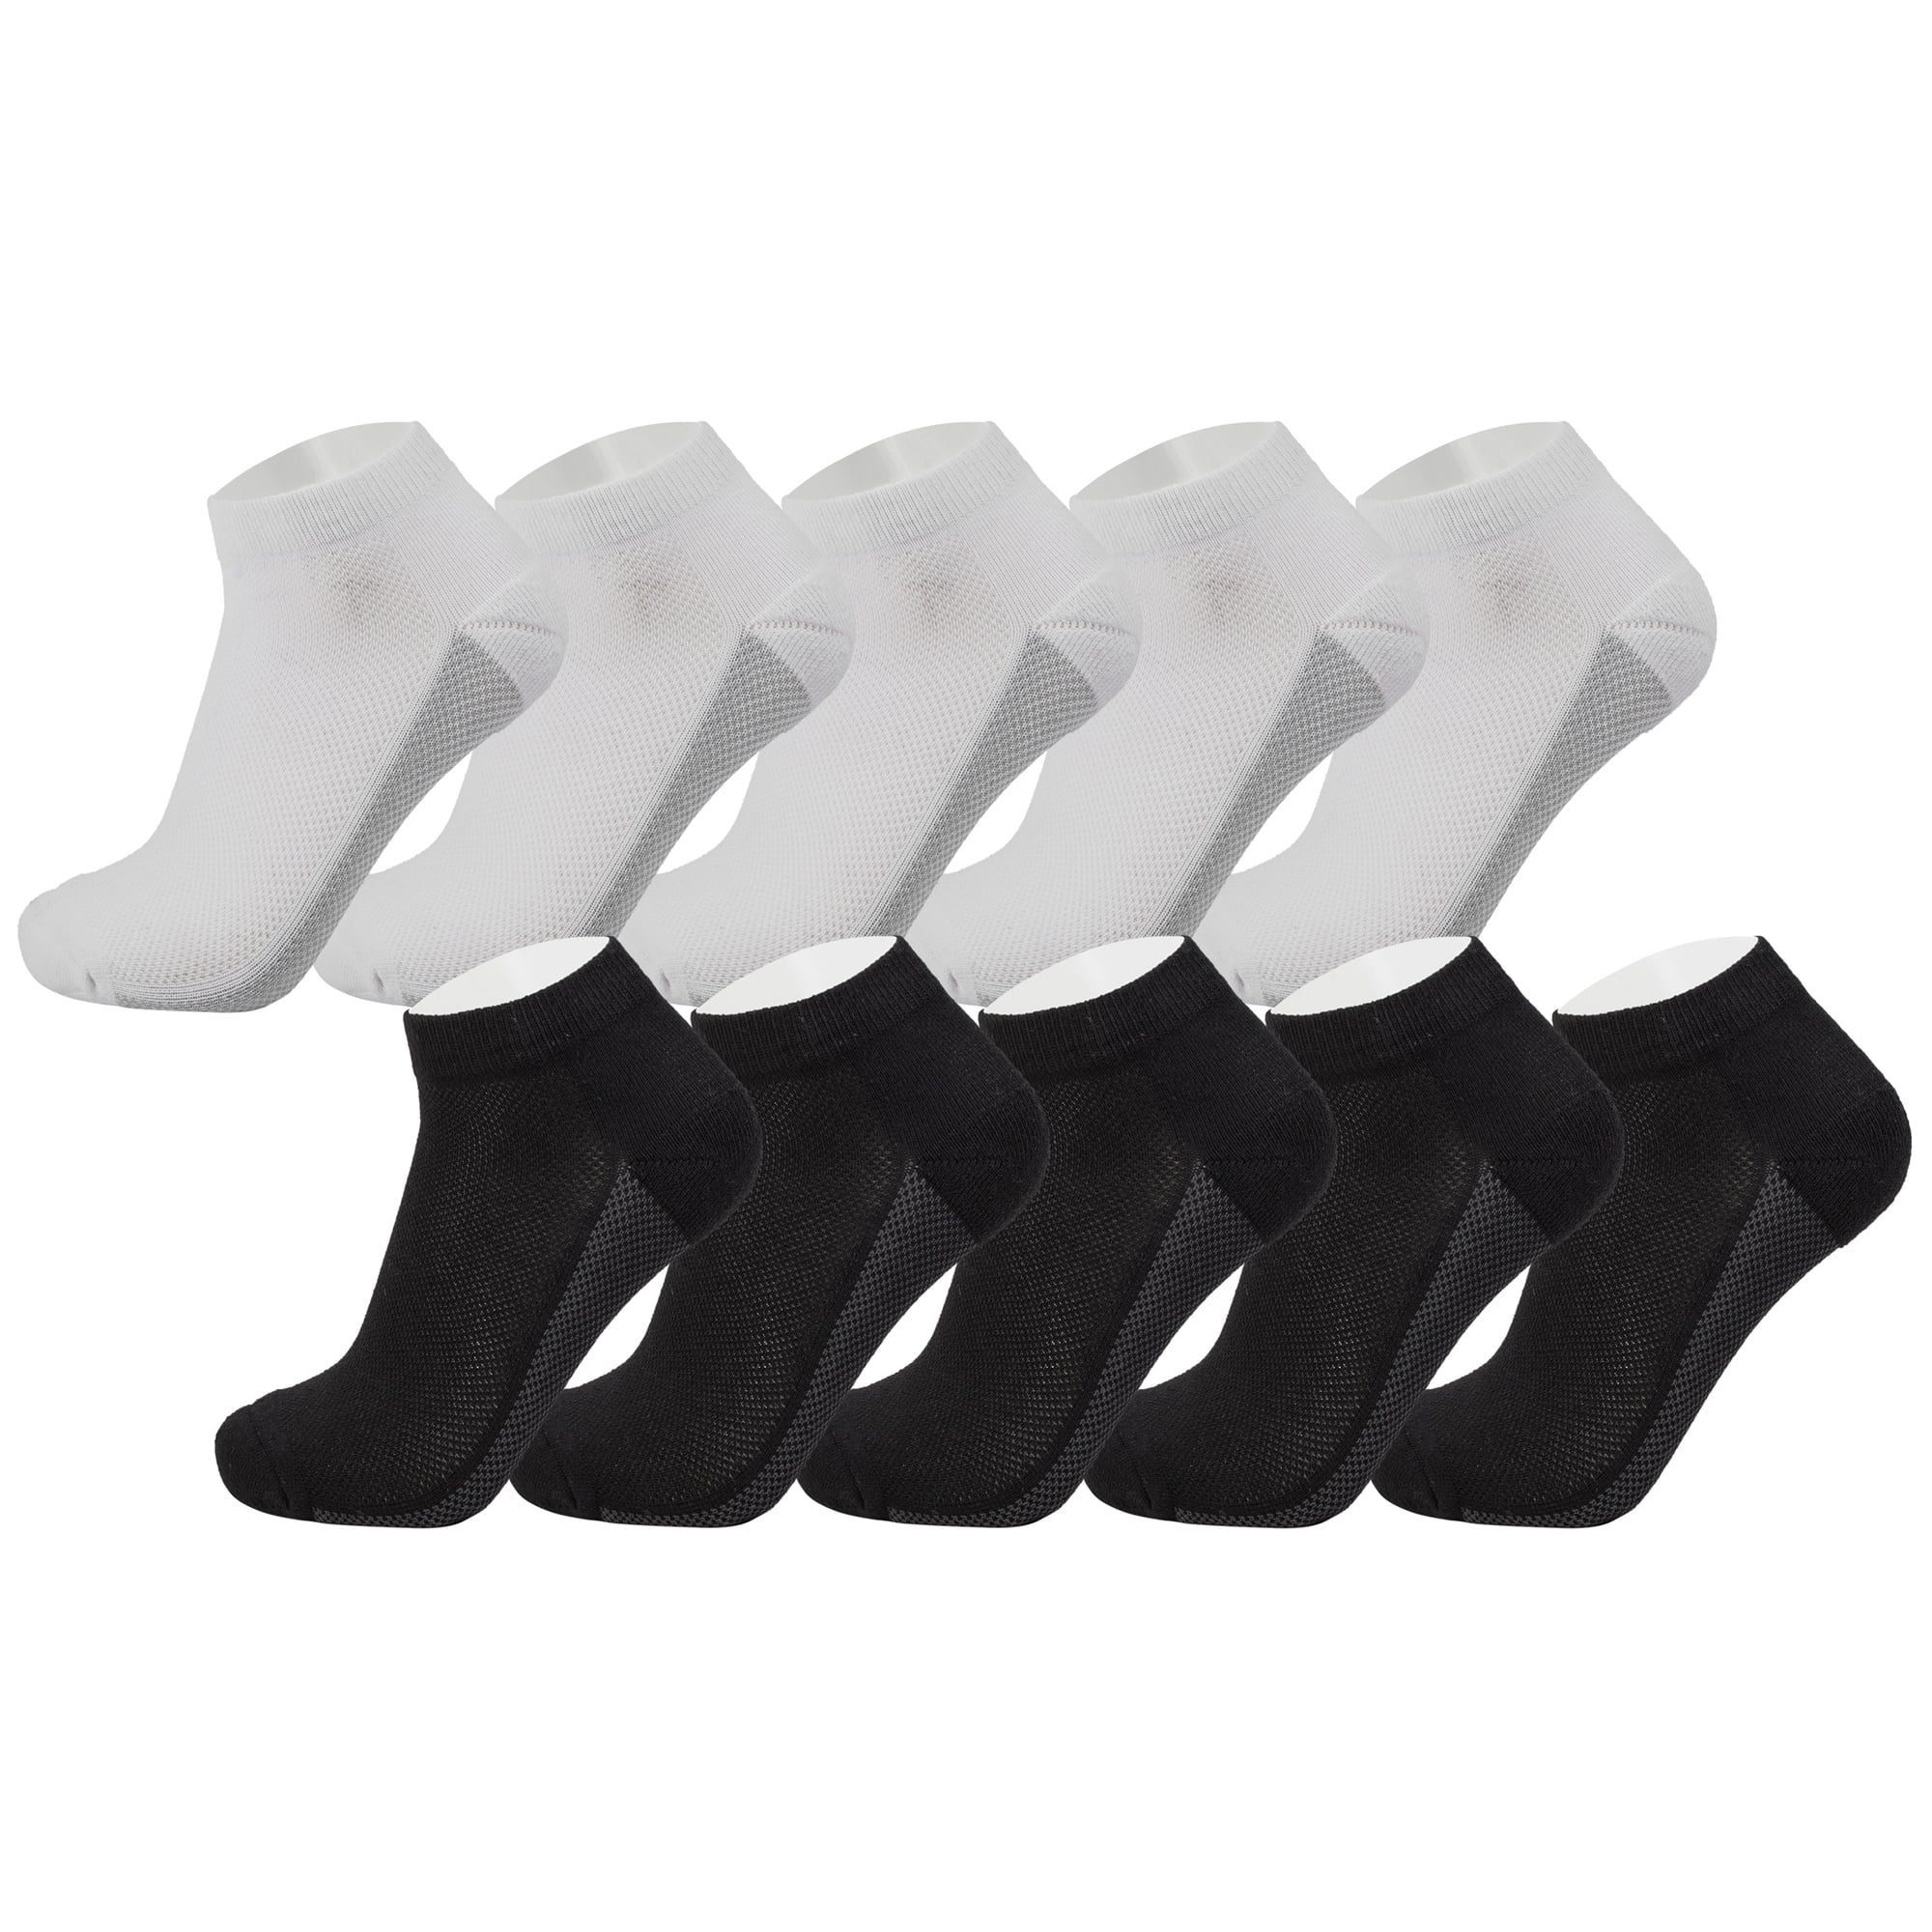 Alpine Swiss Mens Athletic Performance Low Cut Ankle Socks Cotton ...